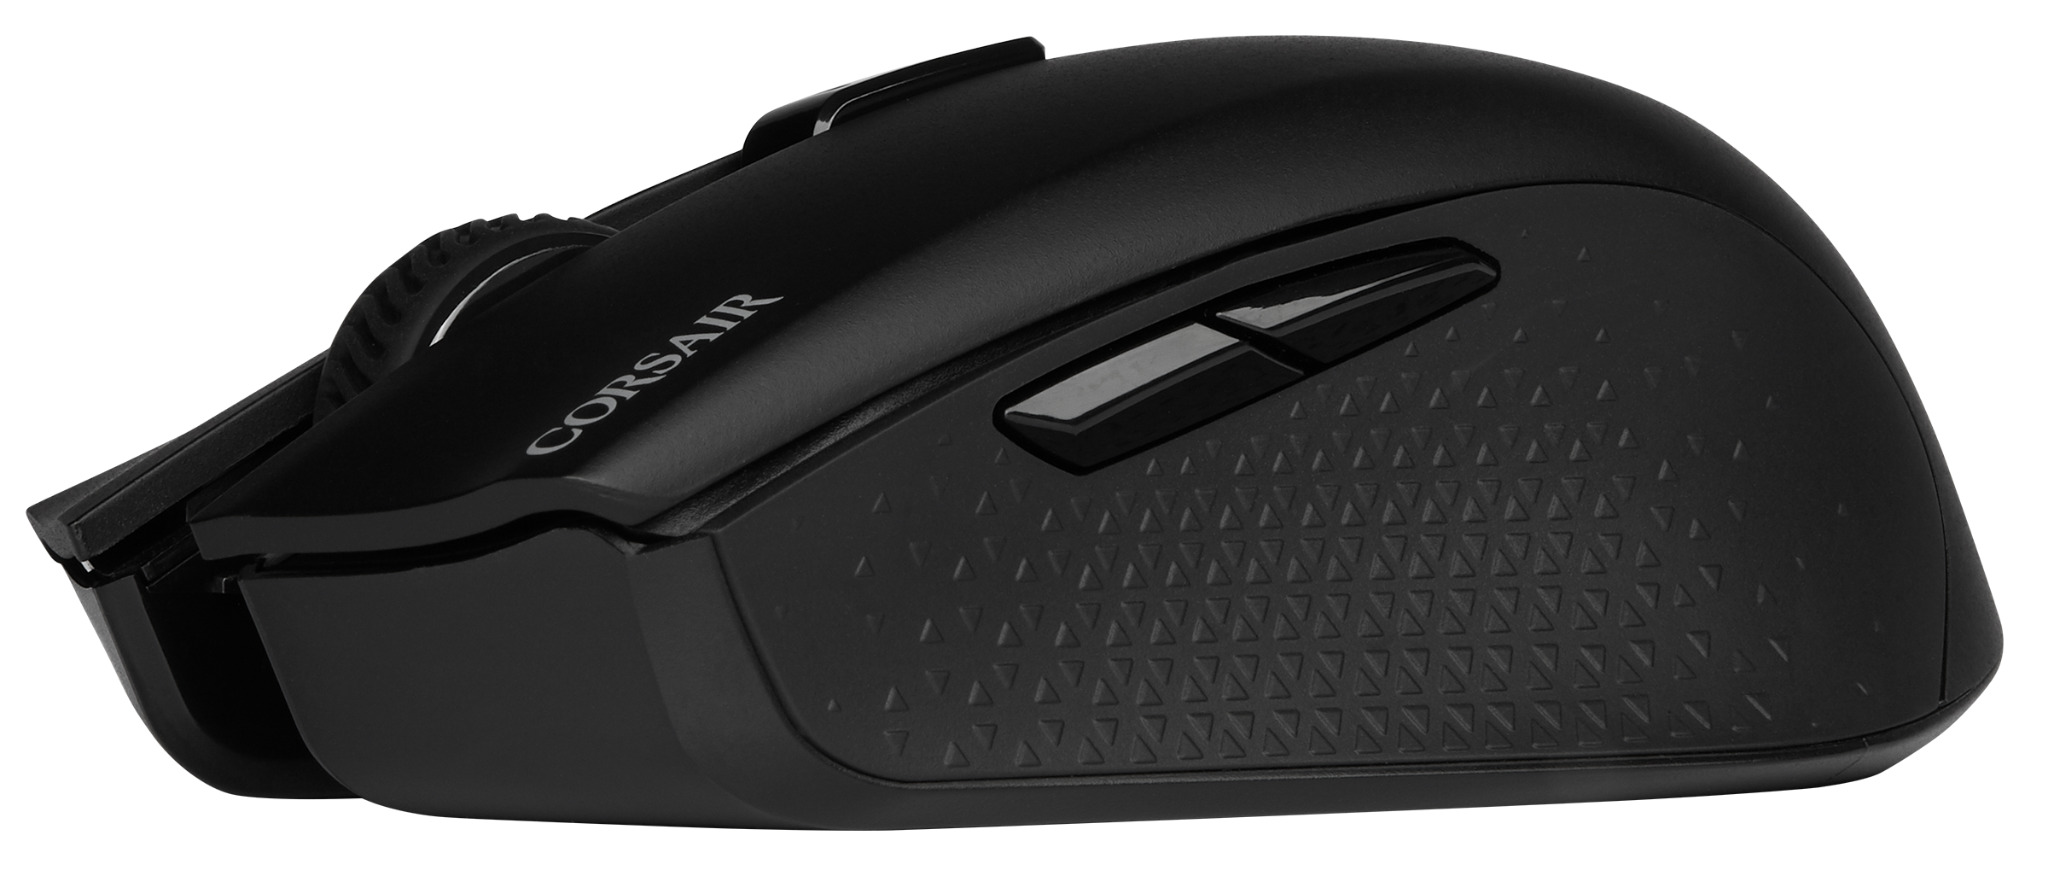 Chuột máy tính - Mouse Corsair Harpoon RGB Wireless